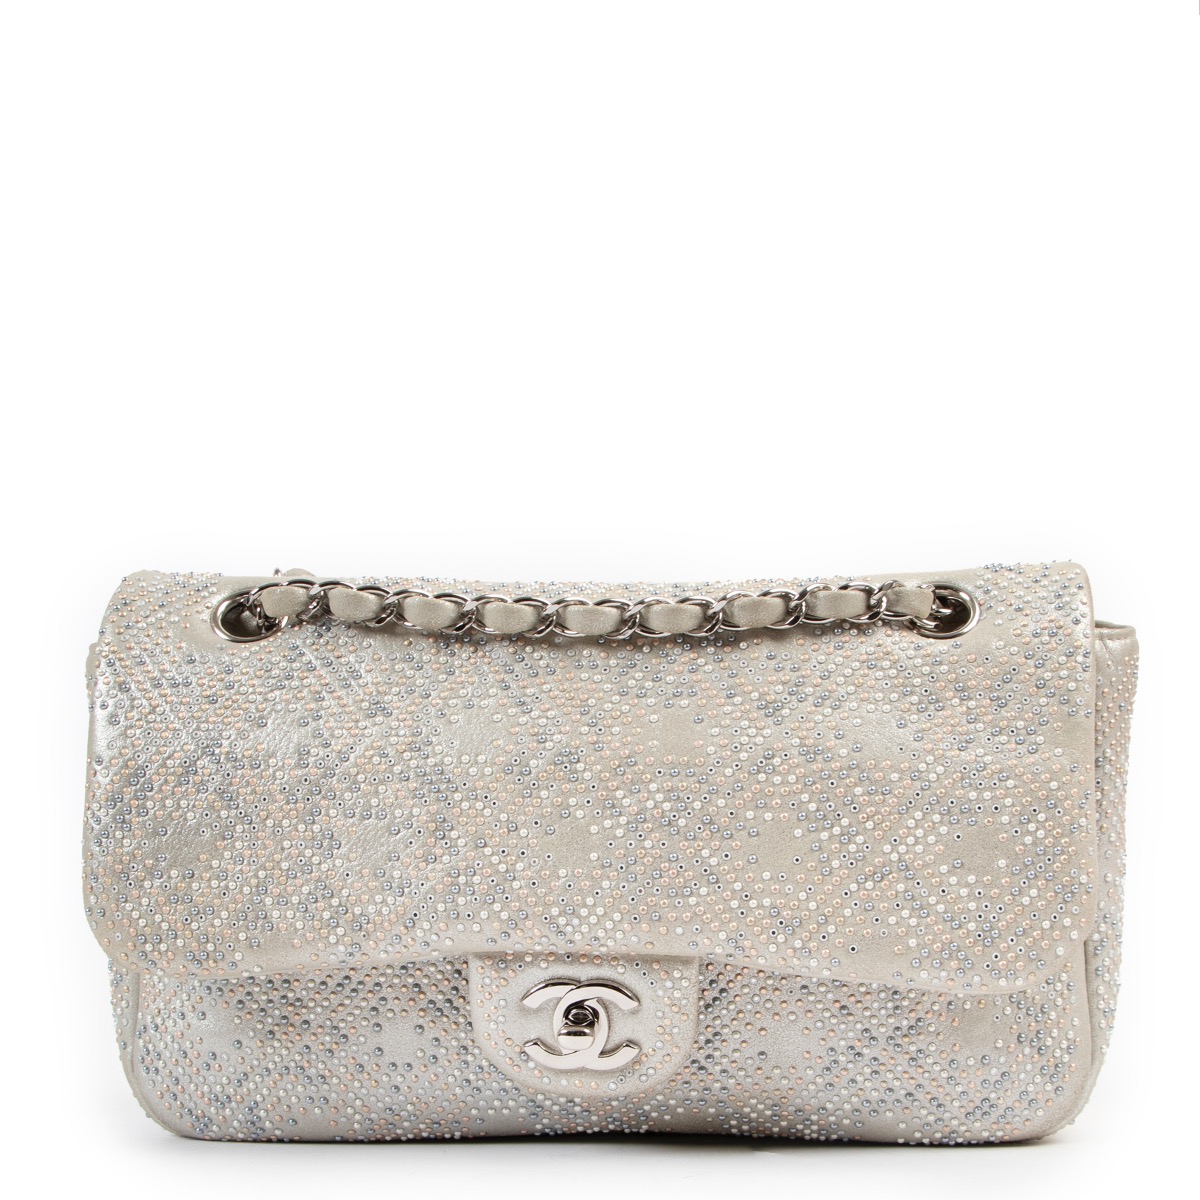 Chanel Iridescent Strass Crystal Bead Medium Classic Flap Bag